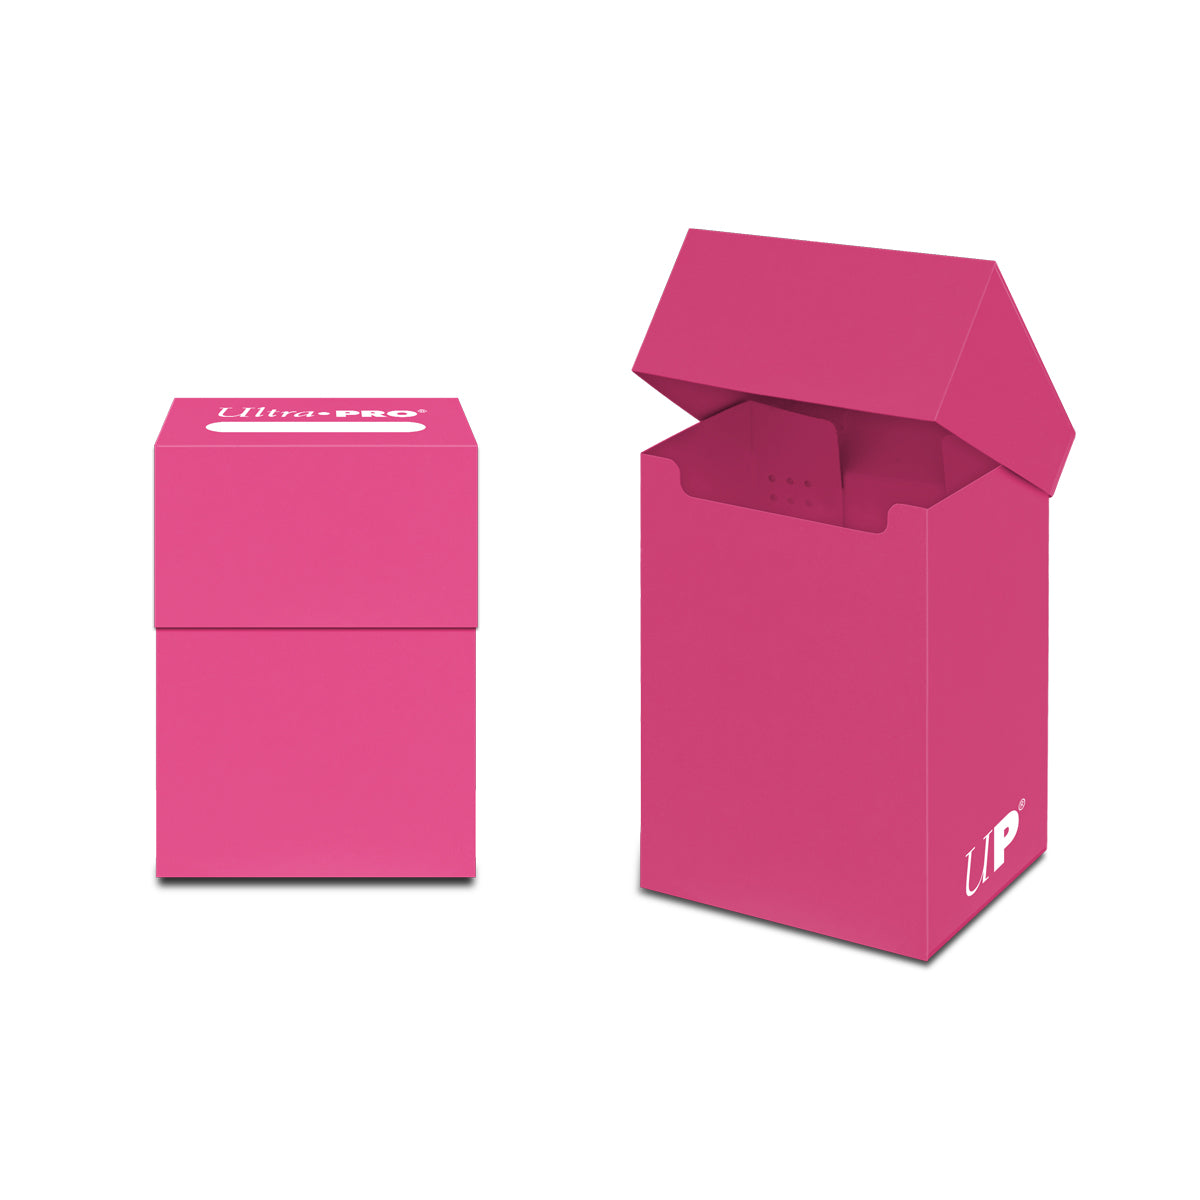 Ultra-Pro Bright Pink Deck Box